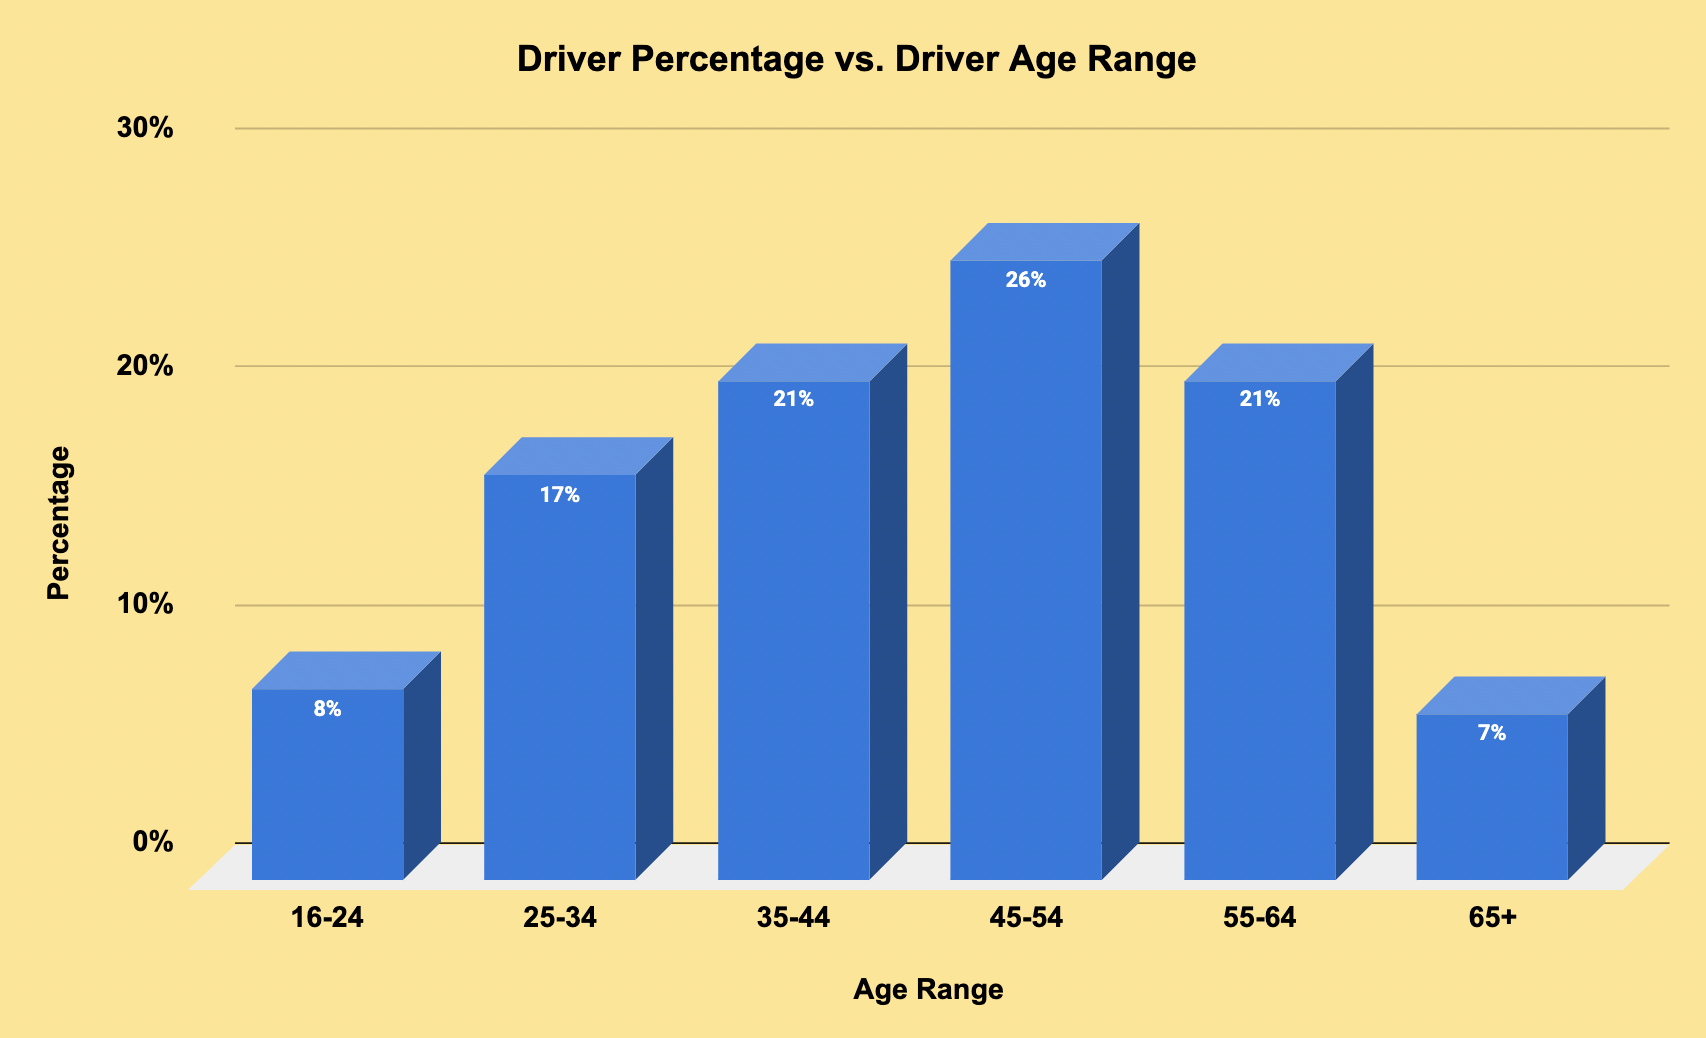 Average Truck Driver Age Range in US